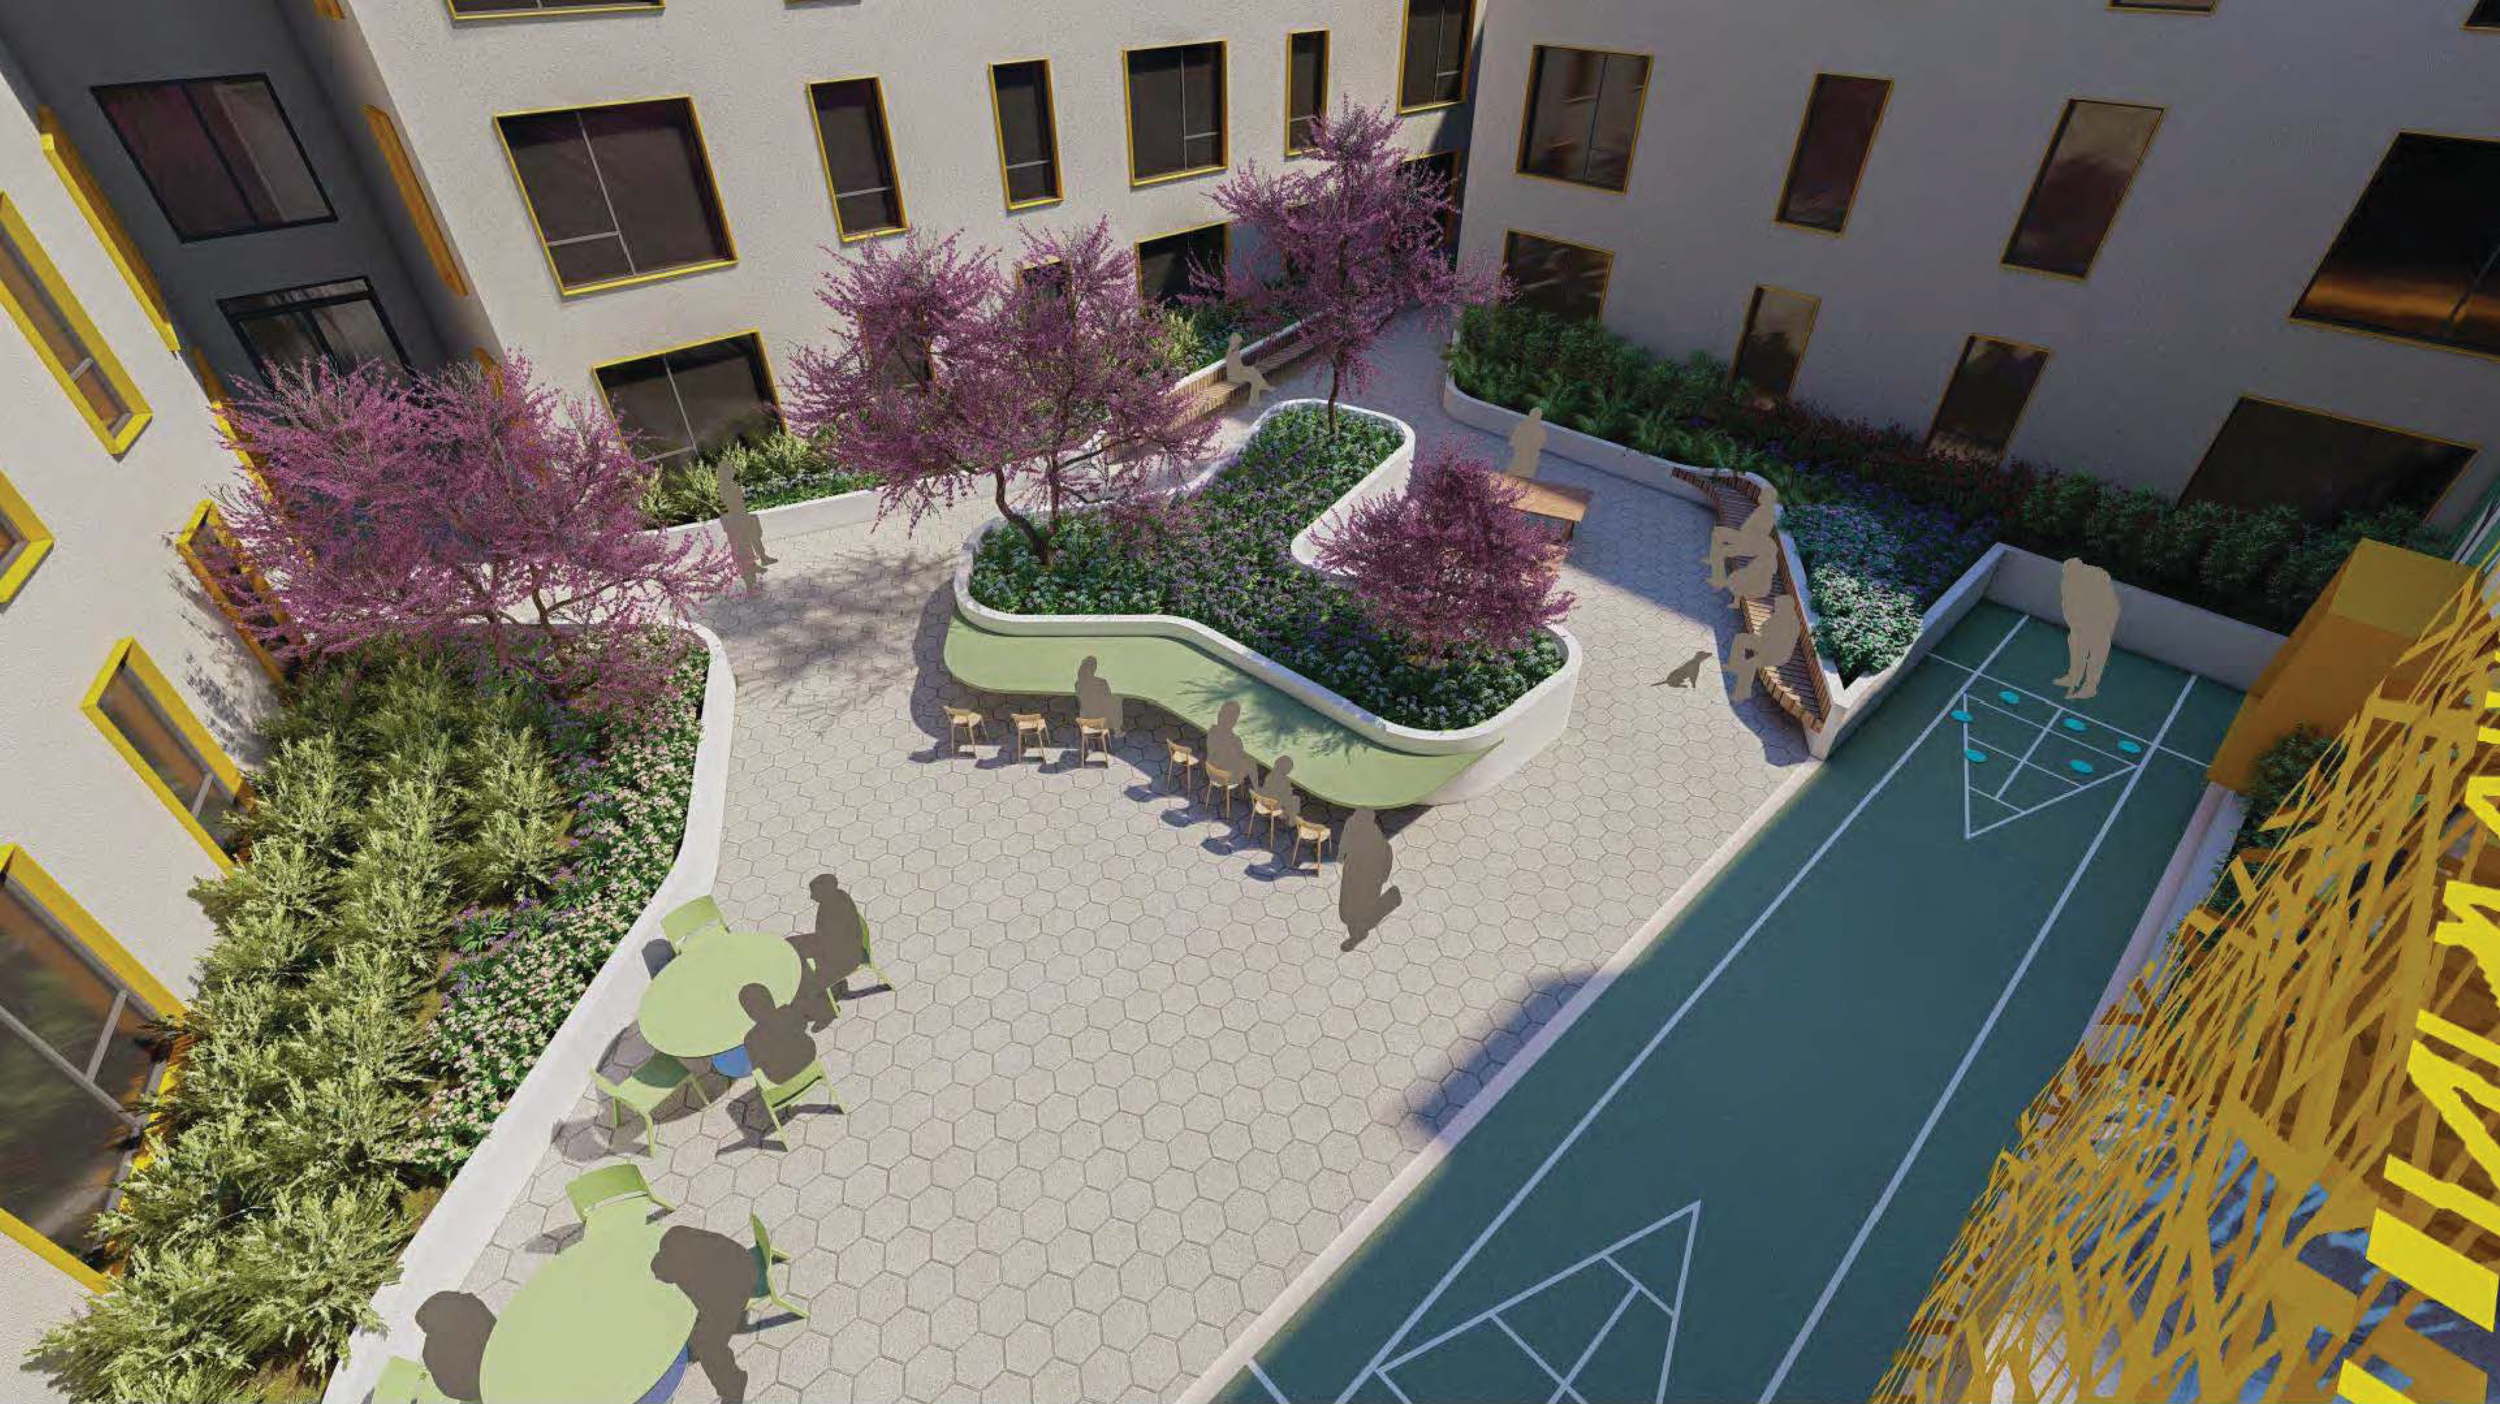 3031 Telegraph Avenue courtyard amenity deck, rendering by Devi Dutta Architecture